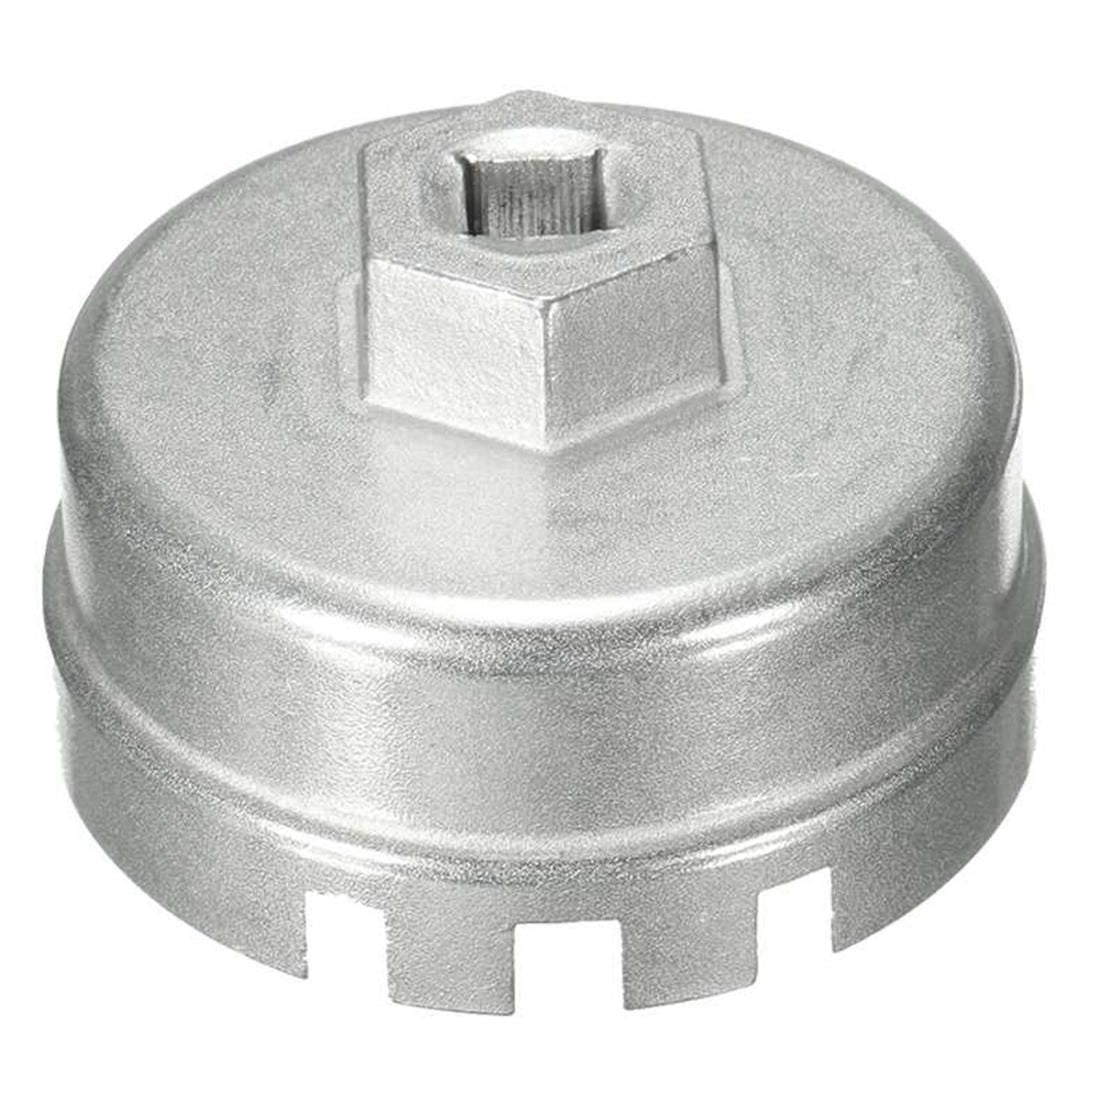 64.5mm Aluminum Oil Filter Wrench Cap Socket Remover Tool for Lexus Toyota Corolla Highlander RAV4 Camry Universal Housing (Silver)